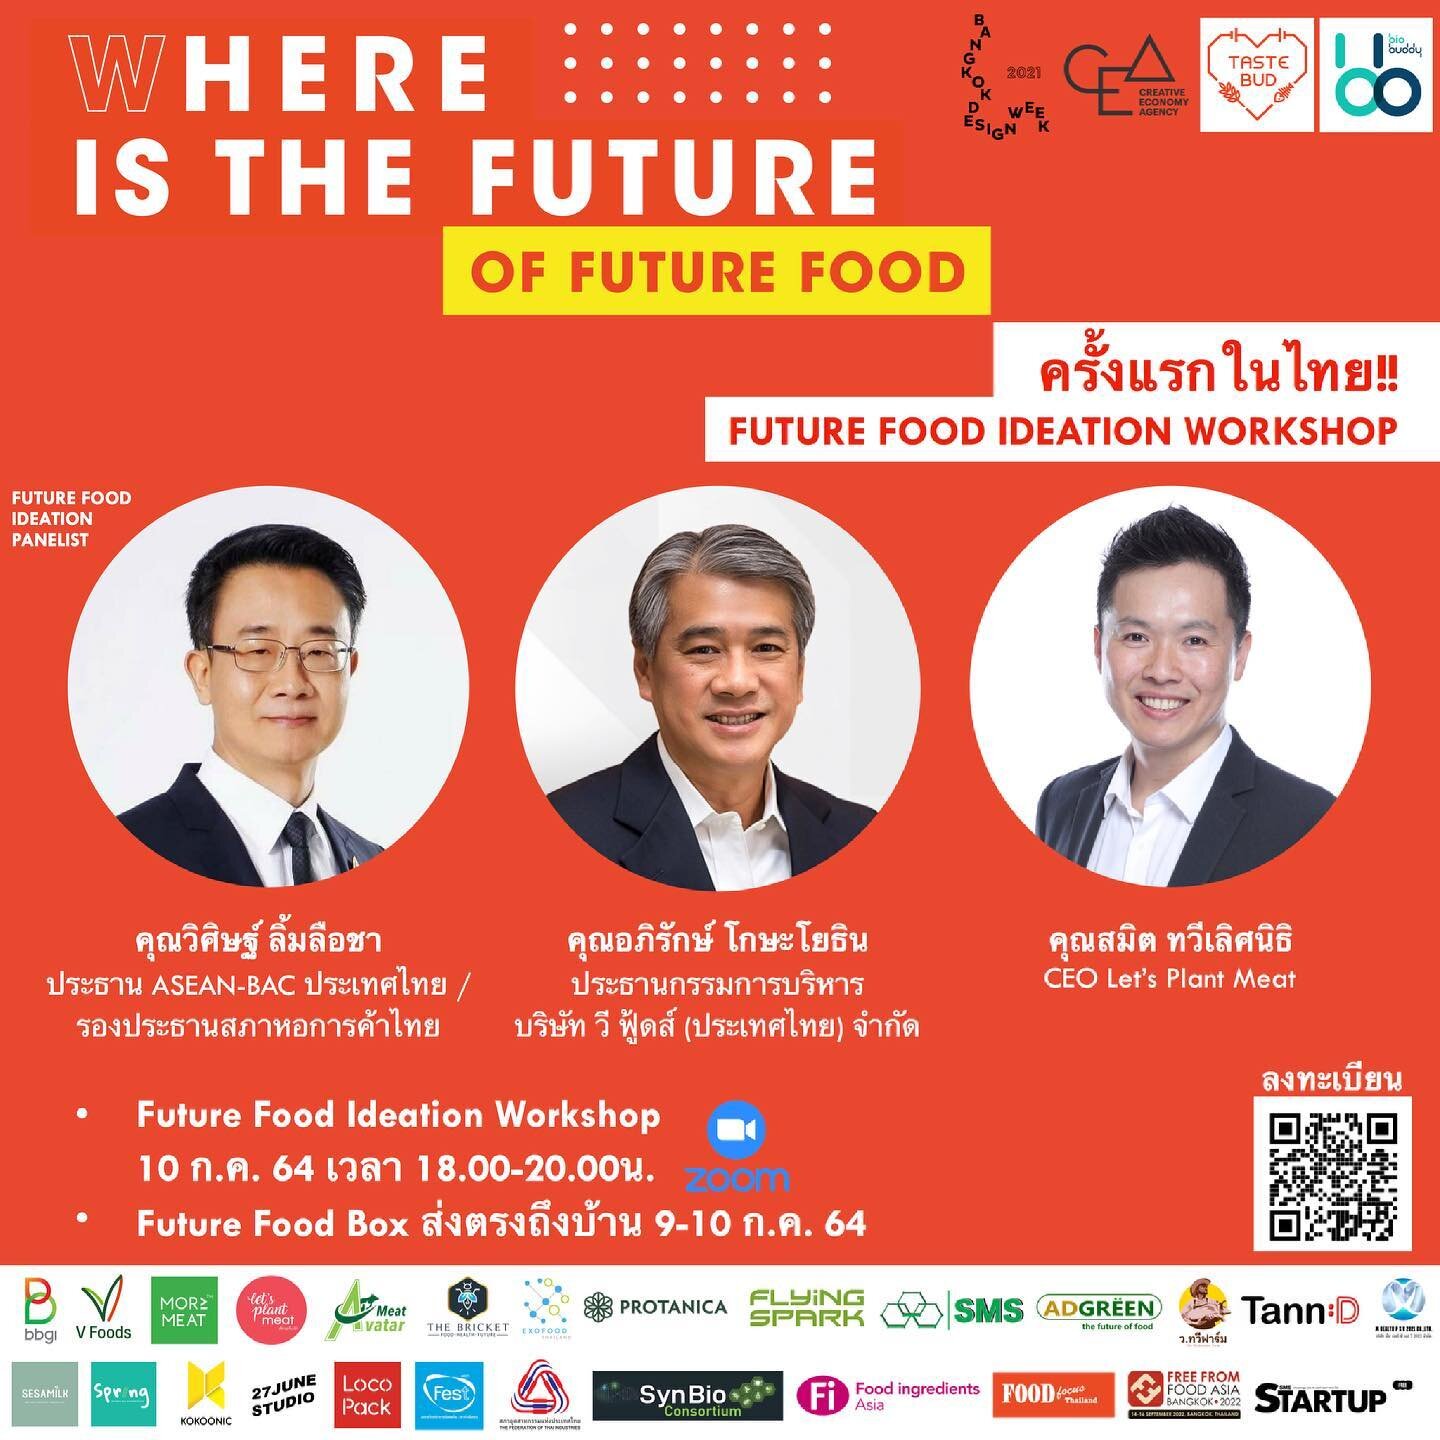 Future Food Ideation Workshop เปิดประสบการณ์ 'อาหารอนาคต' ผ่านทุกประสาทสัมผัส แบบ Virtual Future Food Experience by TASTEBUD

ครั้งแรกในไทย‼️ มาร่วมกันค้นหาคำตอบของ อาหารอนาคต และเปิดประสบการณ์อาหารอนาคต ส่งตรงถึงบ้านได้แล้ววันนี้
ลงทะเบียนเข้าร่วมงา